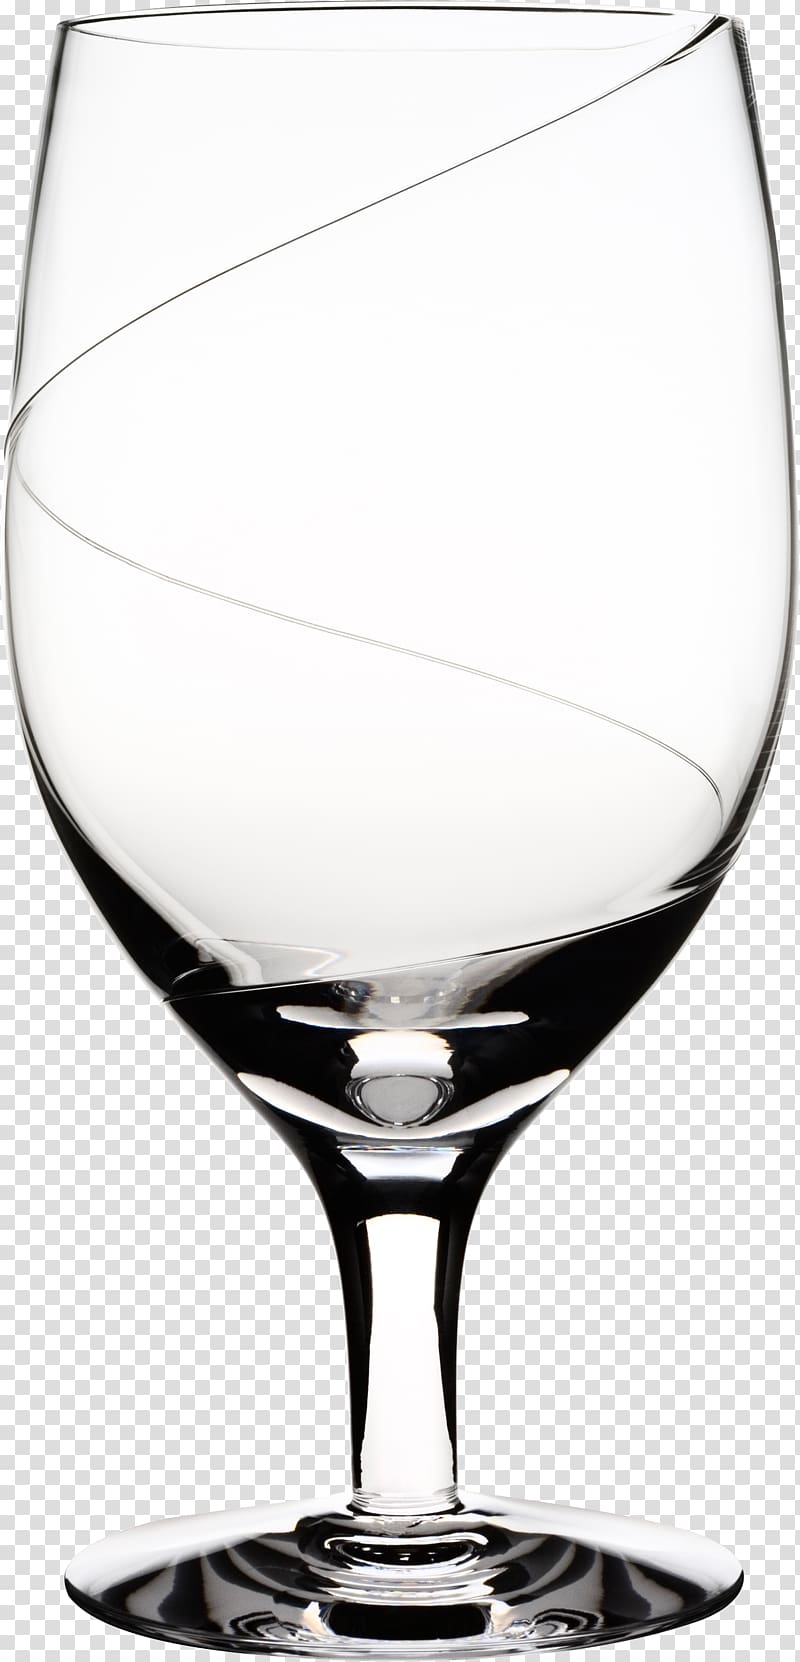 Wine glass Kingdom of Crystal Kosta, Sweden Orrefors Kosta Glasbruk, Empty wine glass transparent background PNG clipart